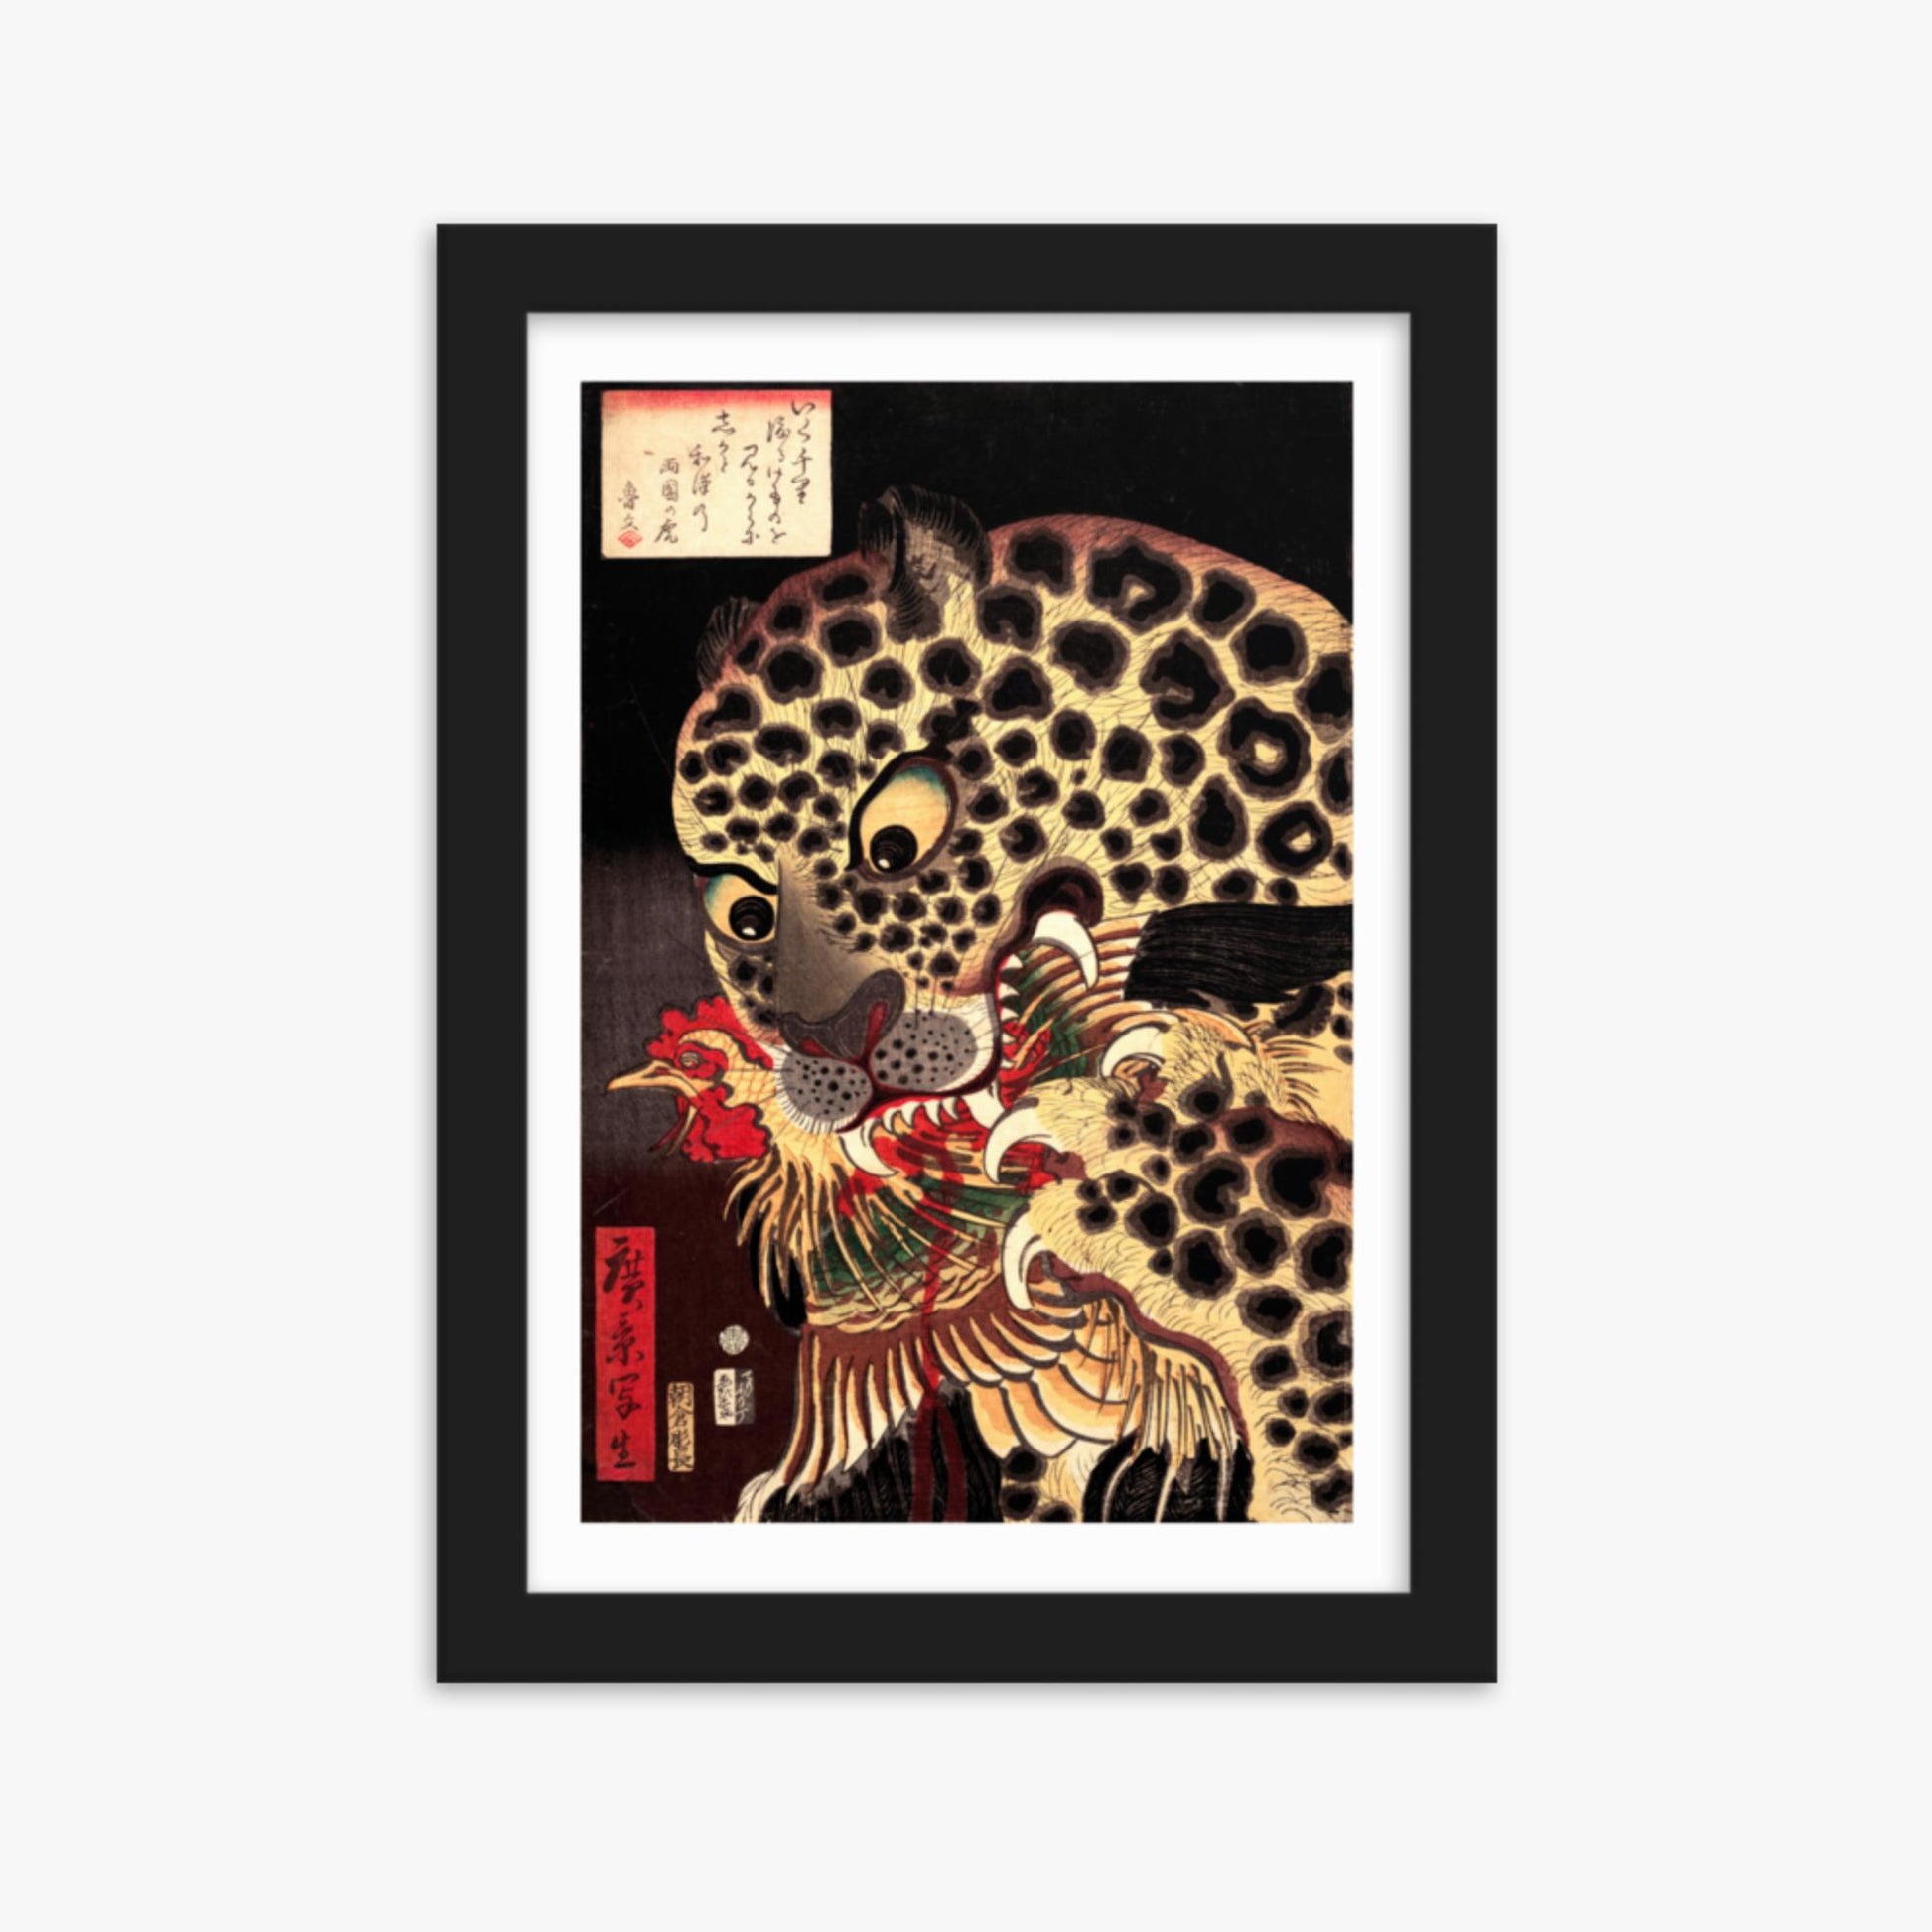 Utagawa Hirokage - The Tiger of Ryōkoku 21x30 cm Poster With Black Frame